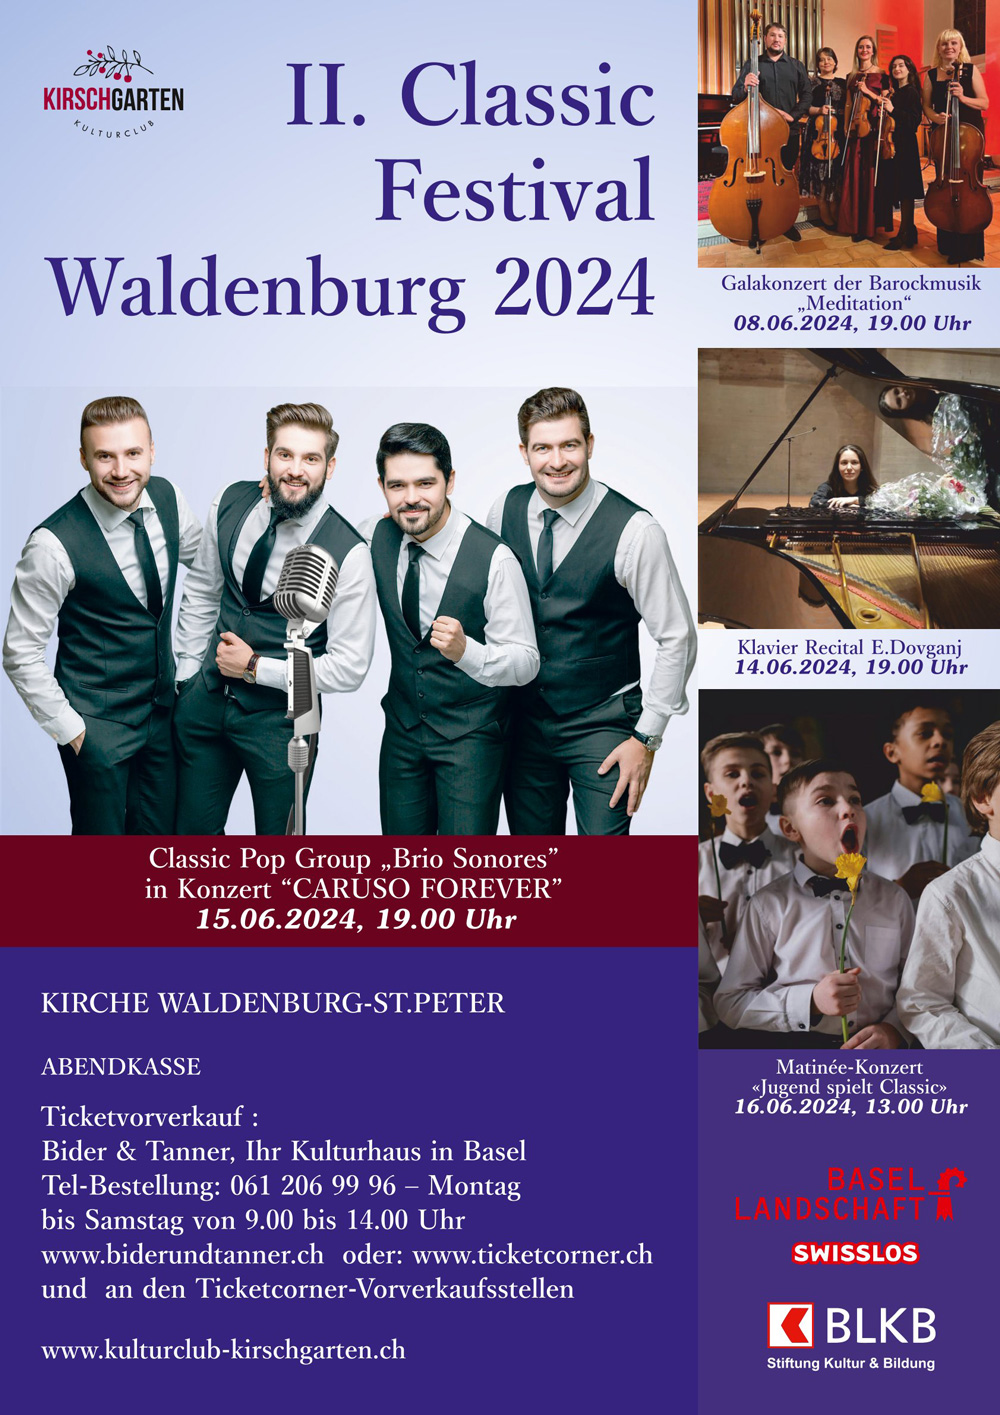 2424 A3 Plakat Ii Classic Festival Waldenburg 2024 (1)